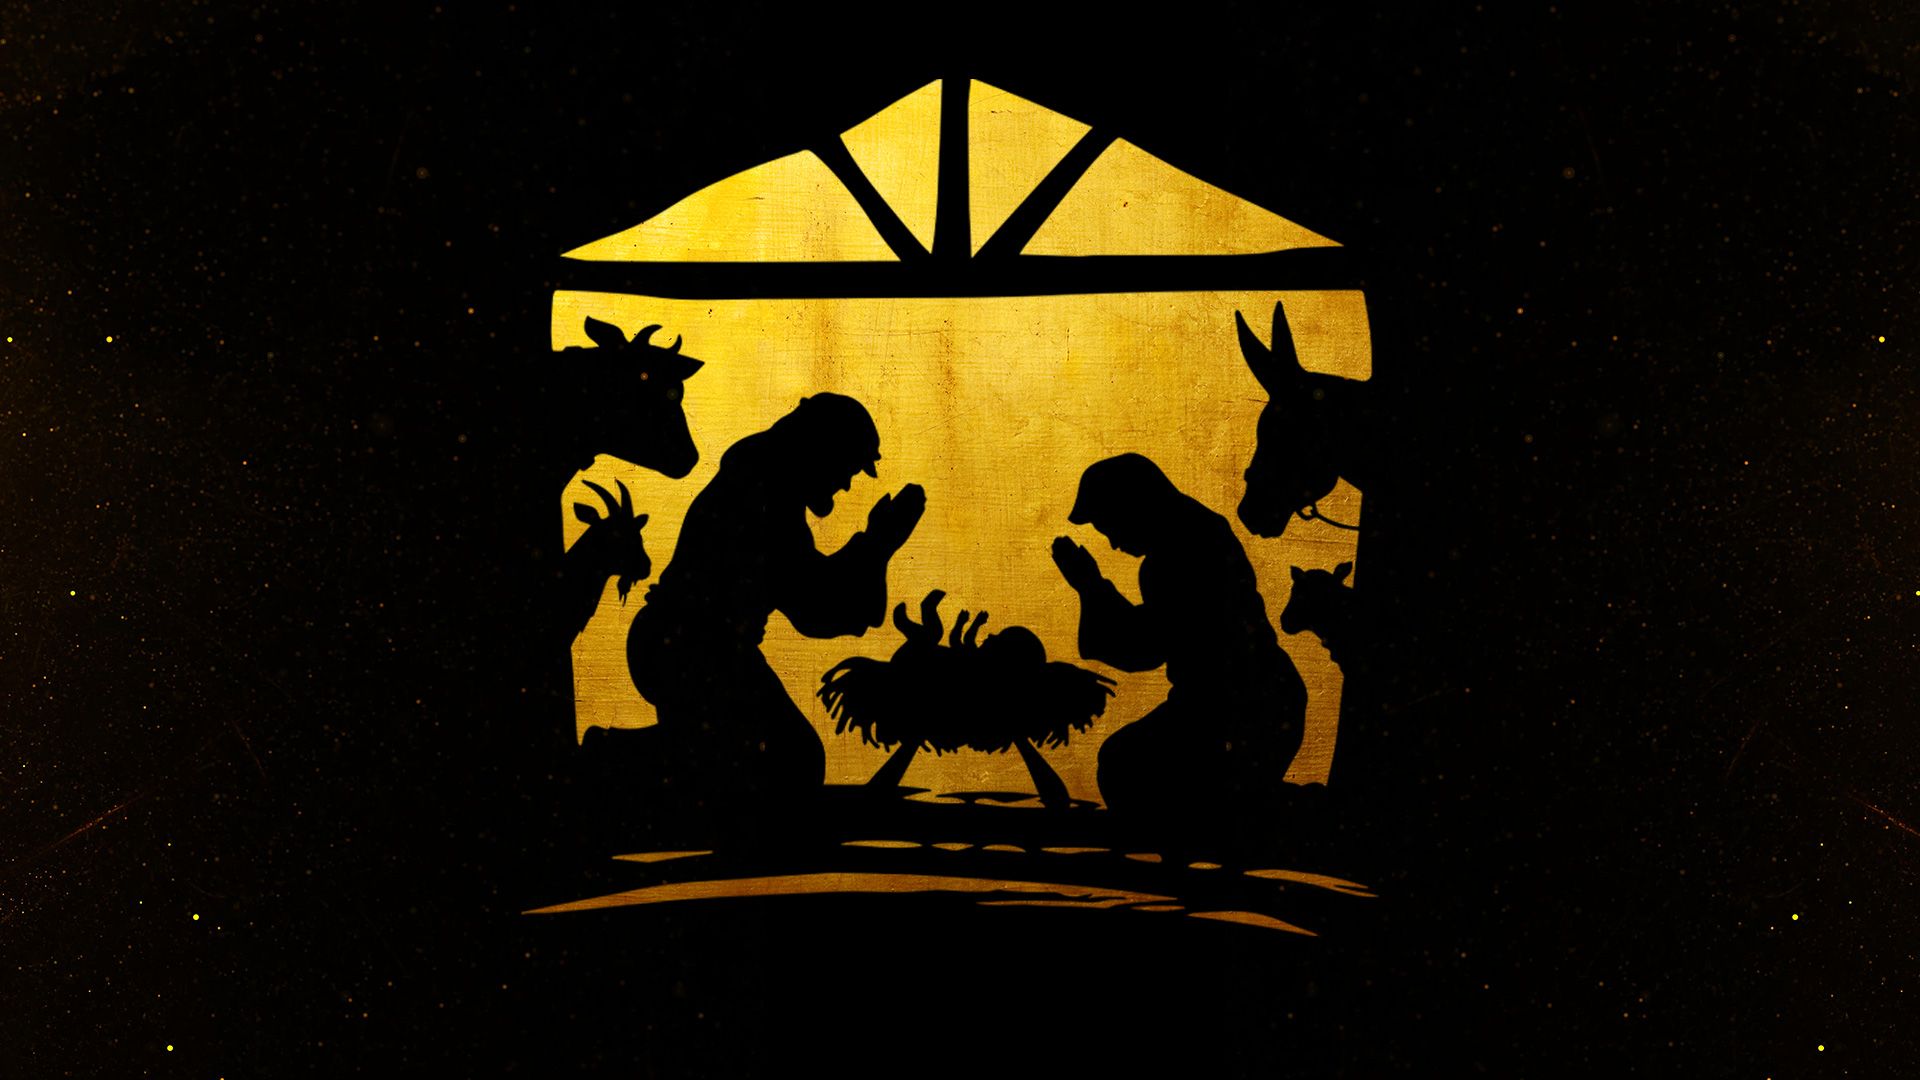 Promotional image for Ожидание Царя